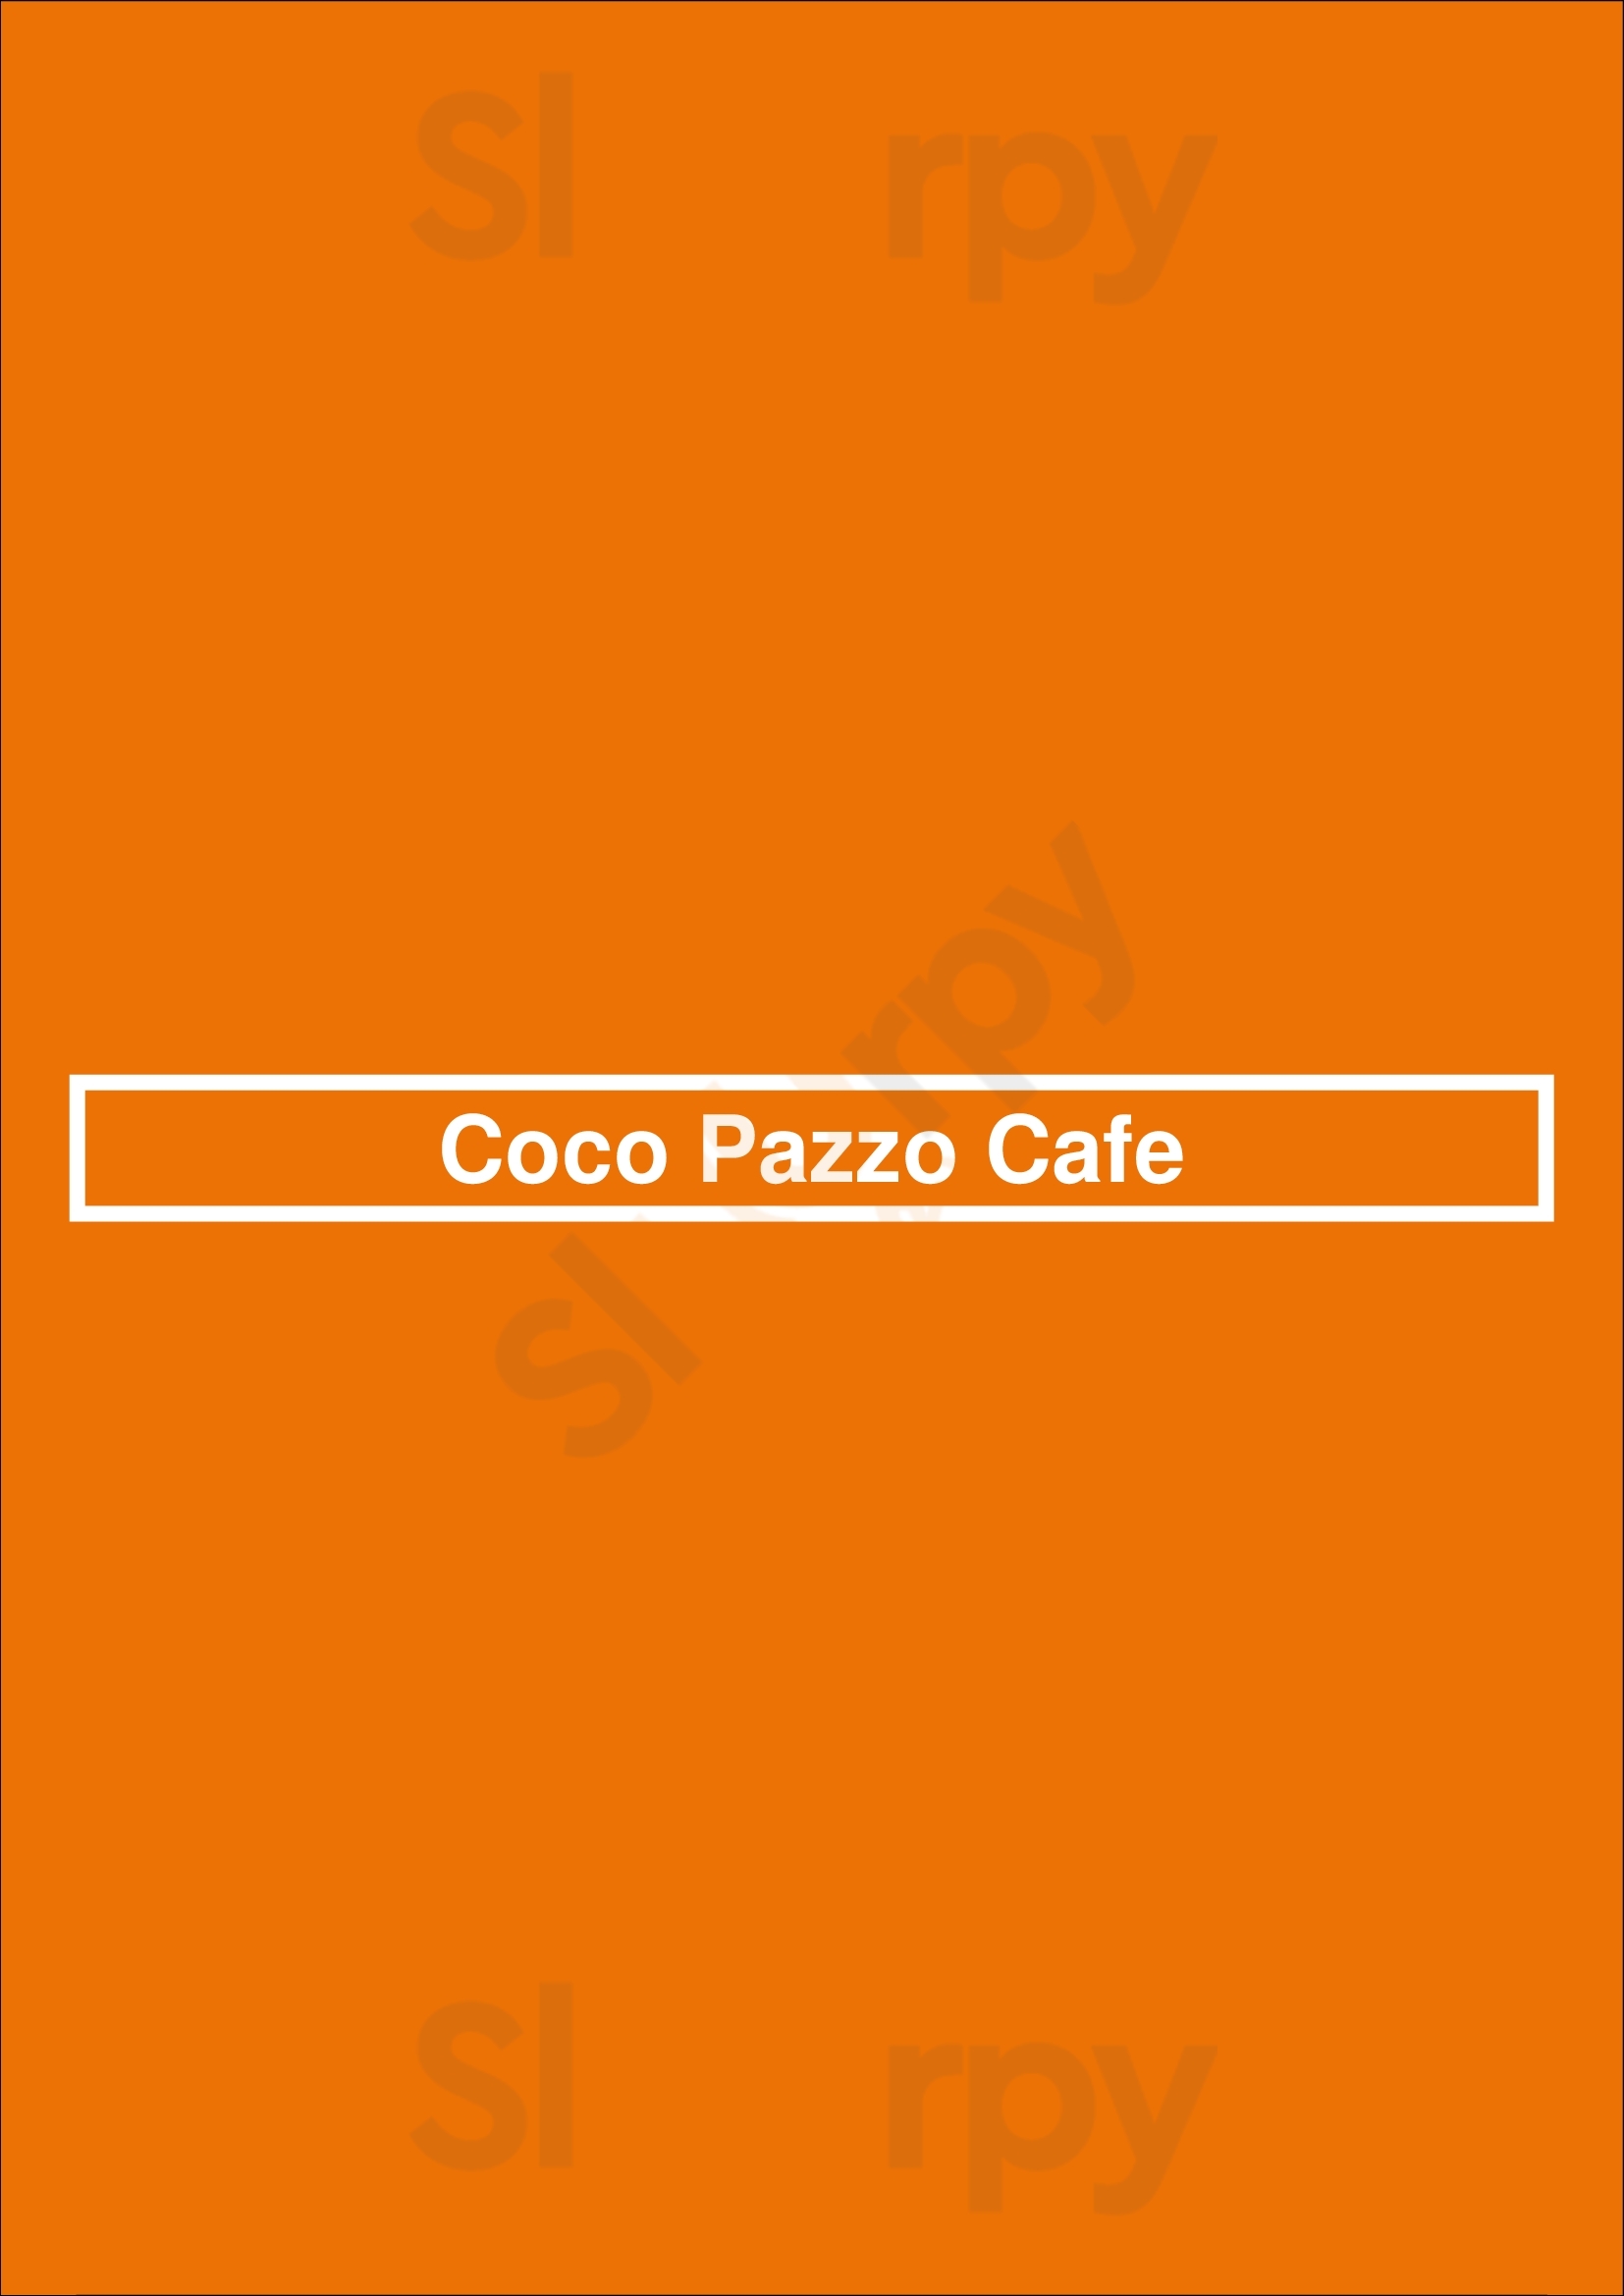 Coco Pazzo Cafe Chicago Menu - 1